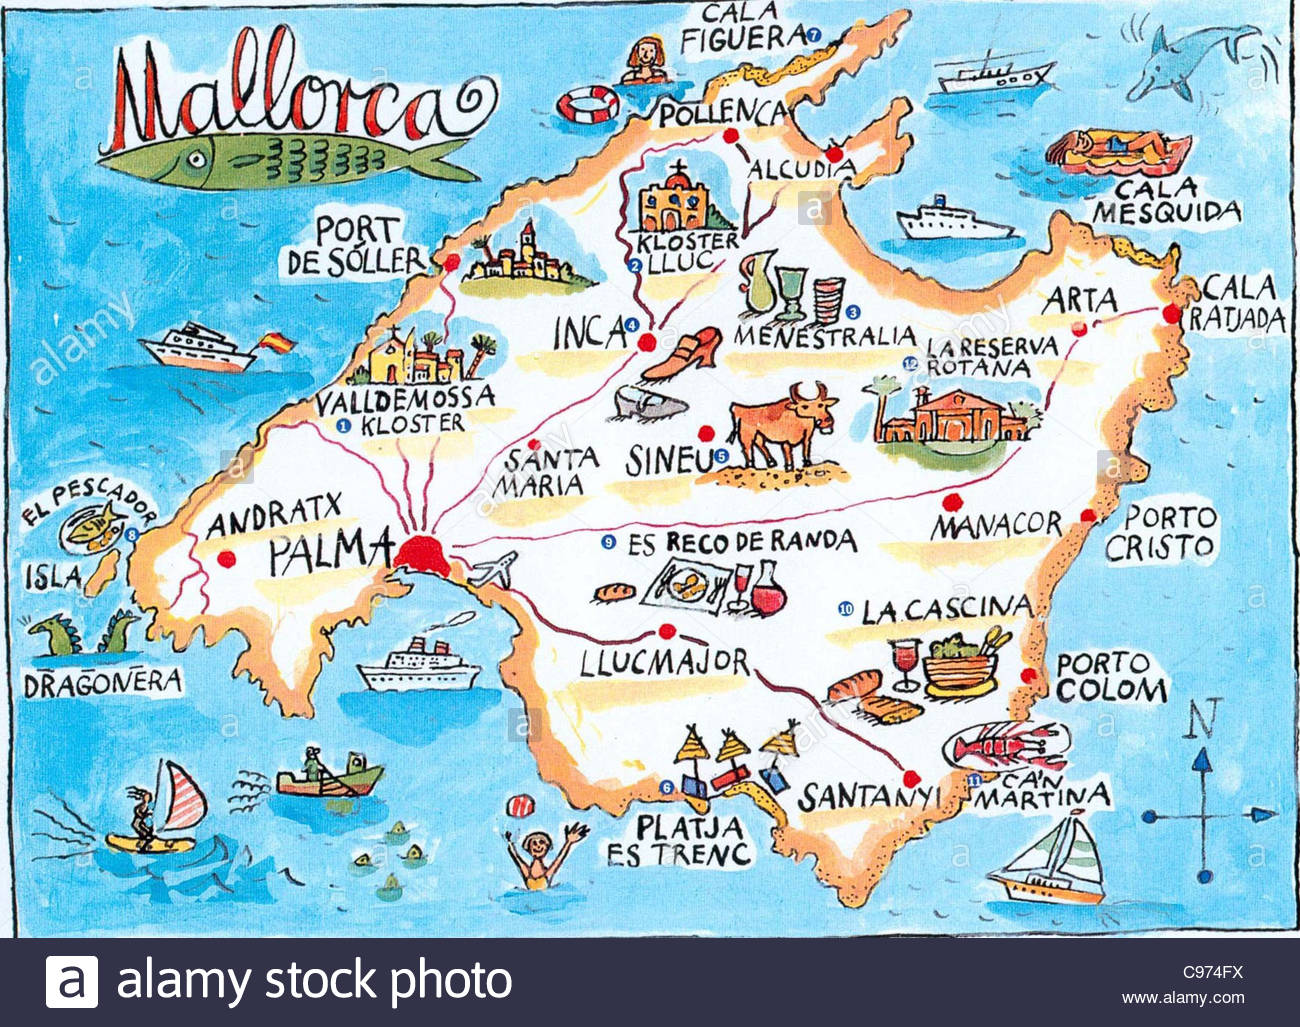 Map Mallorca Maps Map software Cartography Cartography 